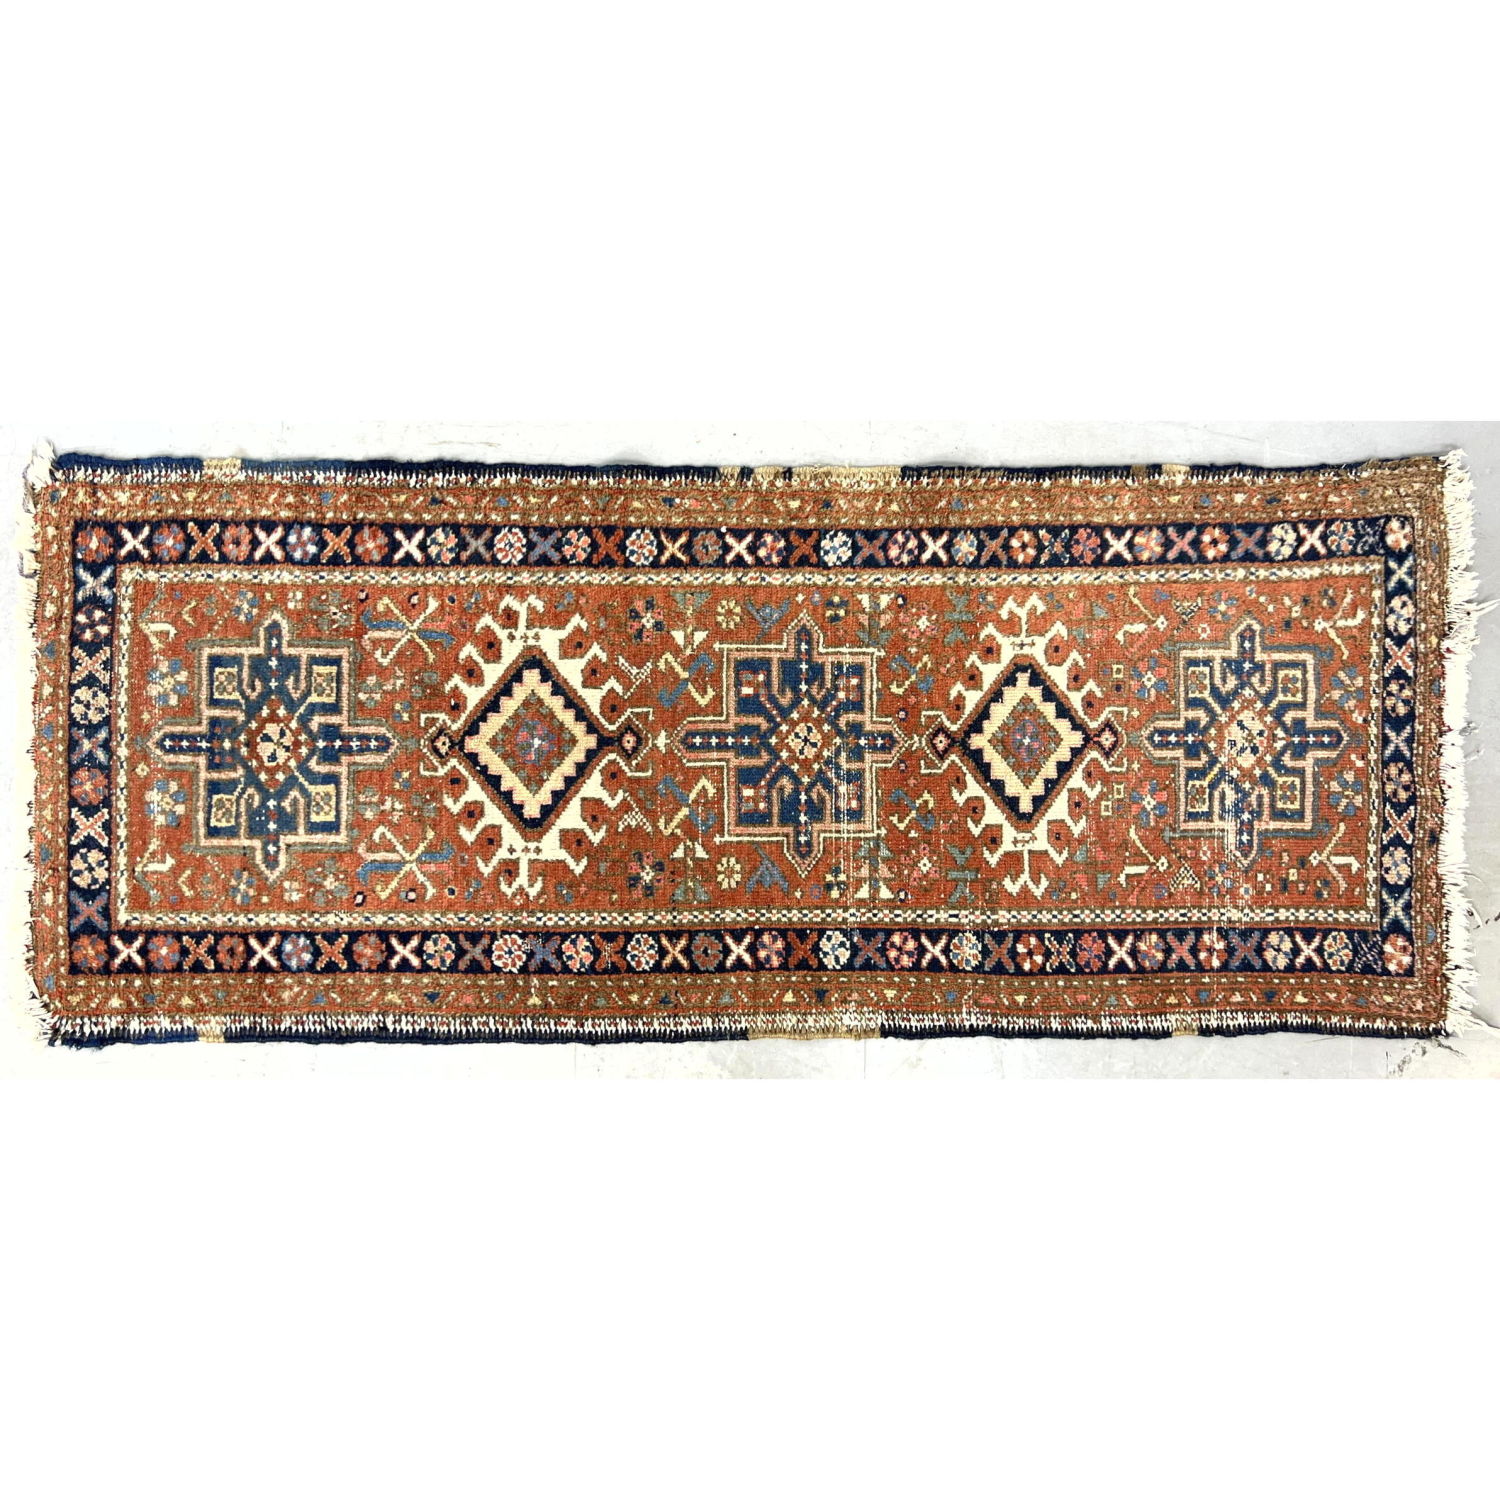 2' x 5' Handmade Oriental Carpet